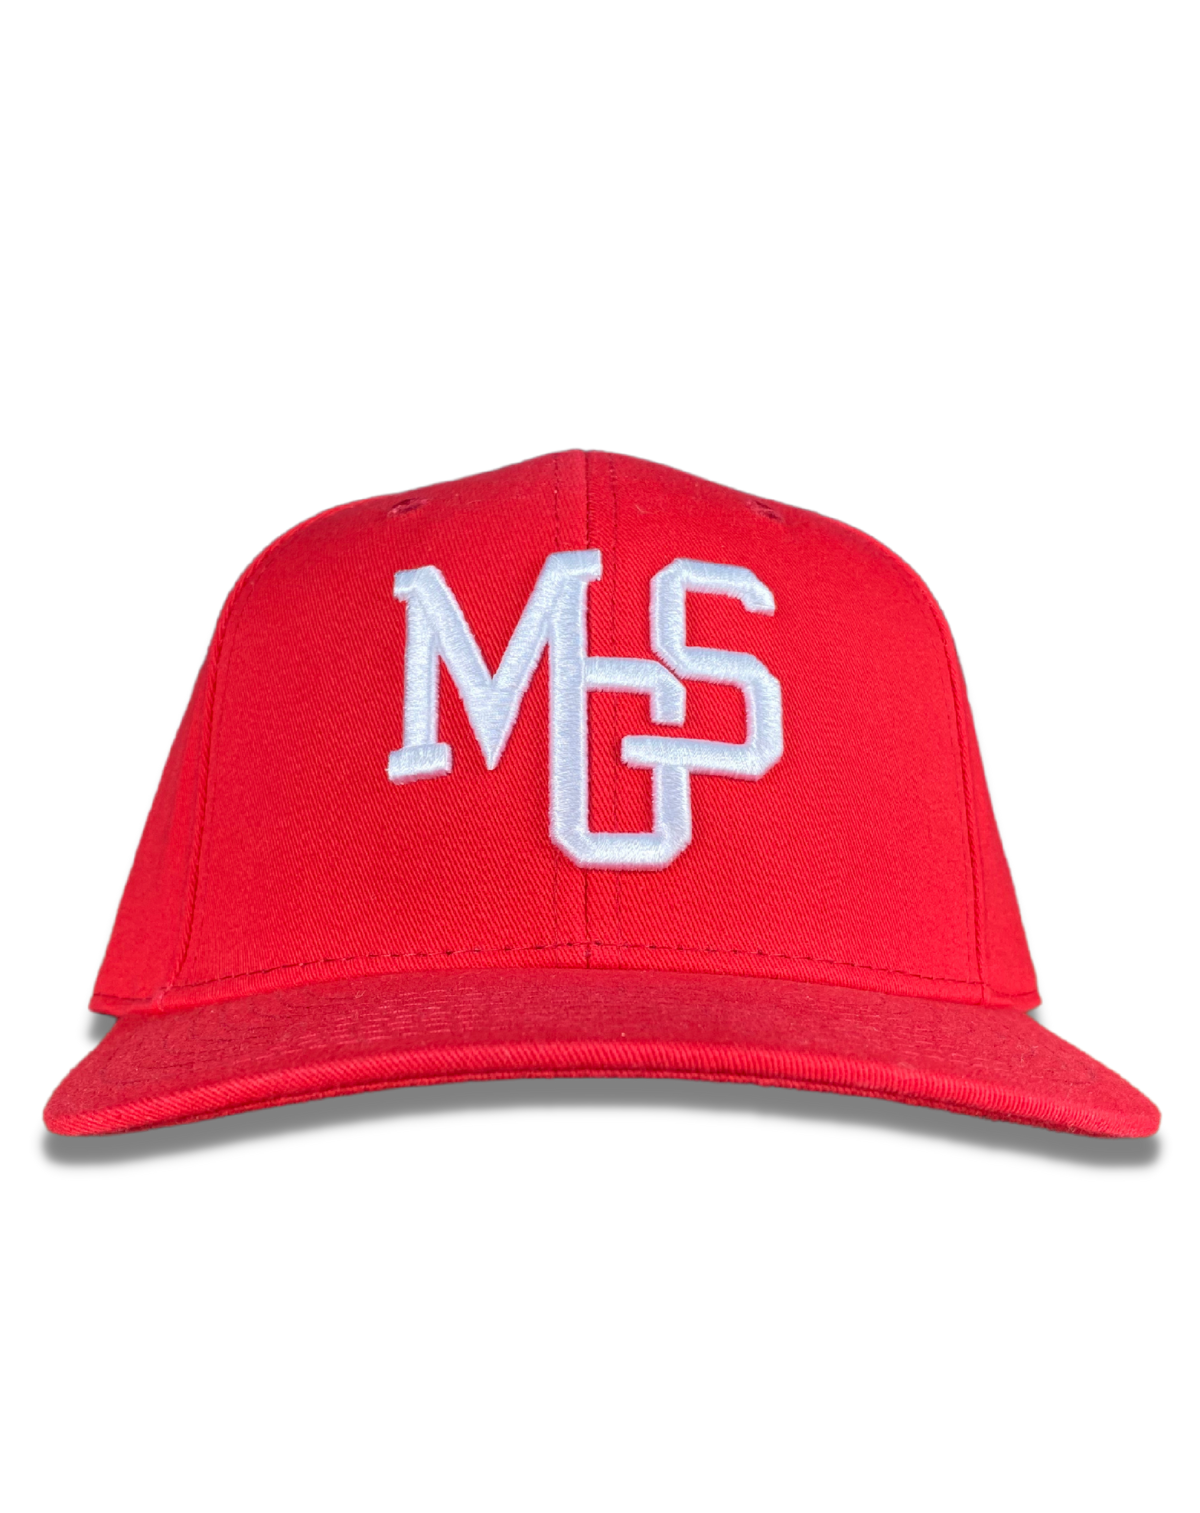 MyGolfSpy "MGS" Stitch Hat | LIMITED